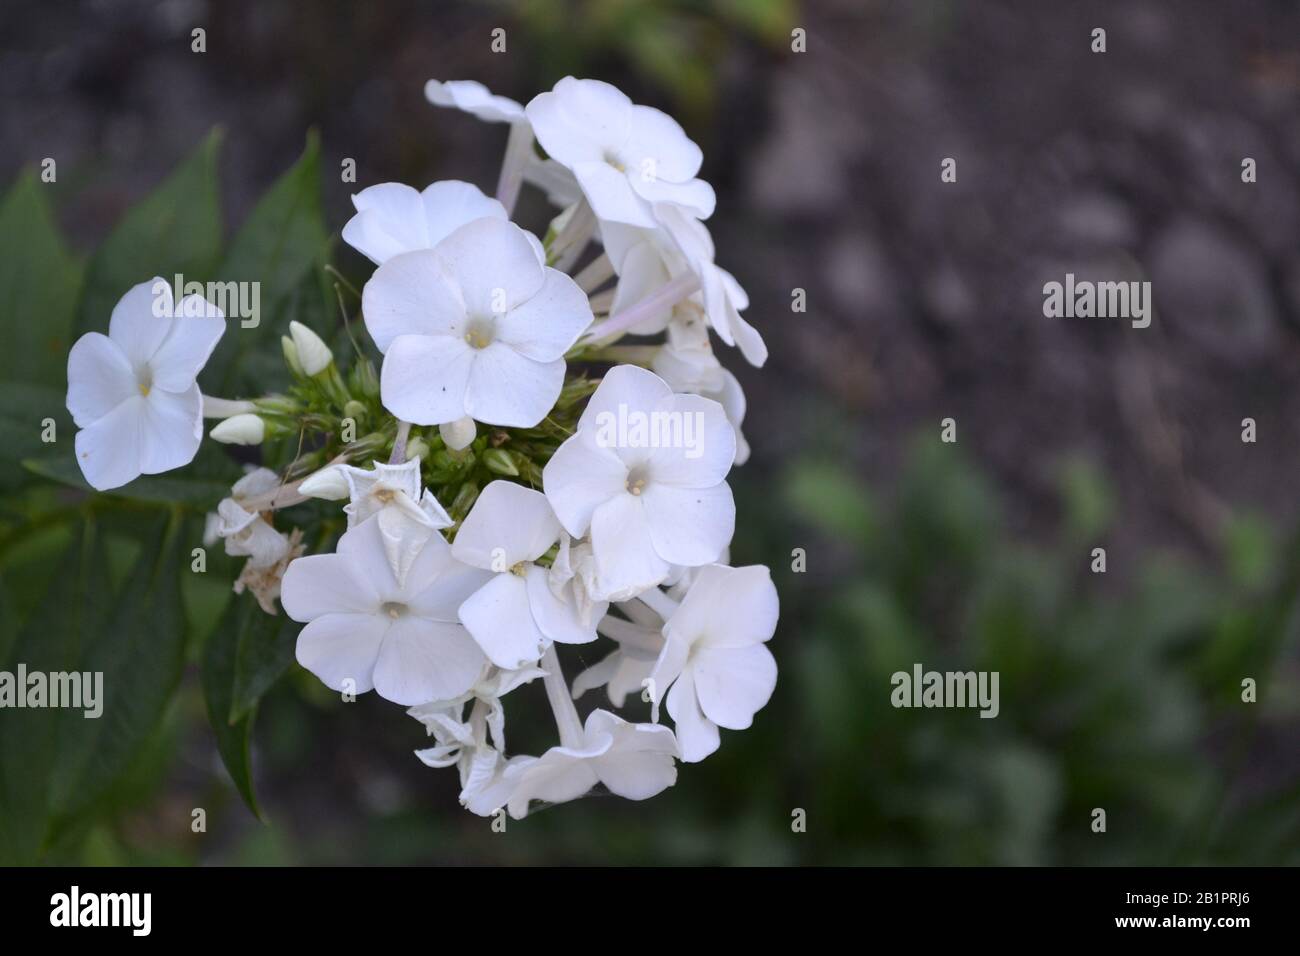 Phlox. Polemoniaceae. Growing flowers. Flowerbed. Garden. Floriculture. White inflorescences. Beautiful flowers. Green leaves. Bushes. Horizontal Stock Photo